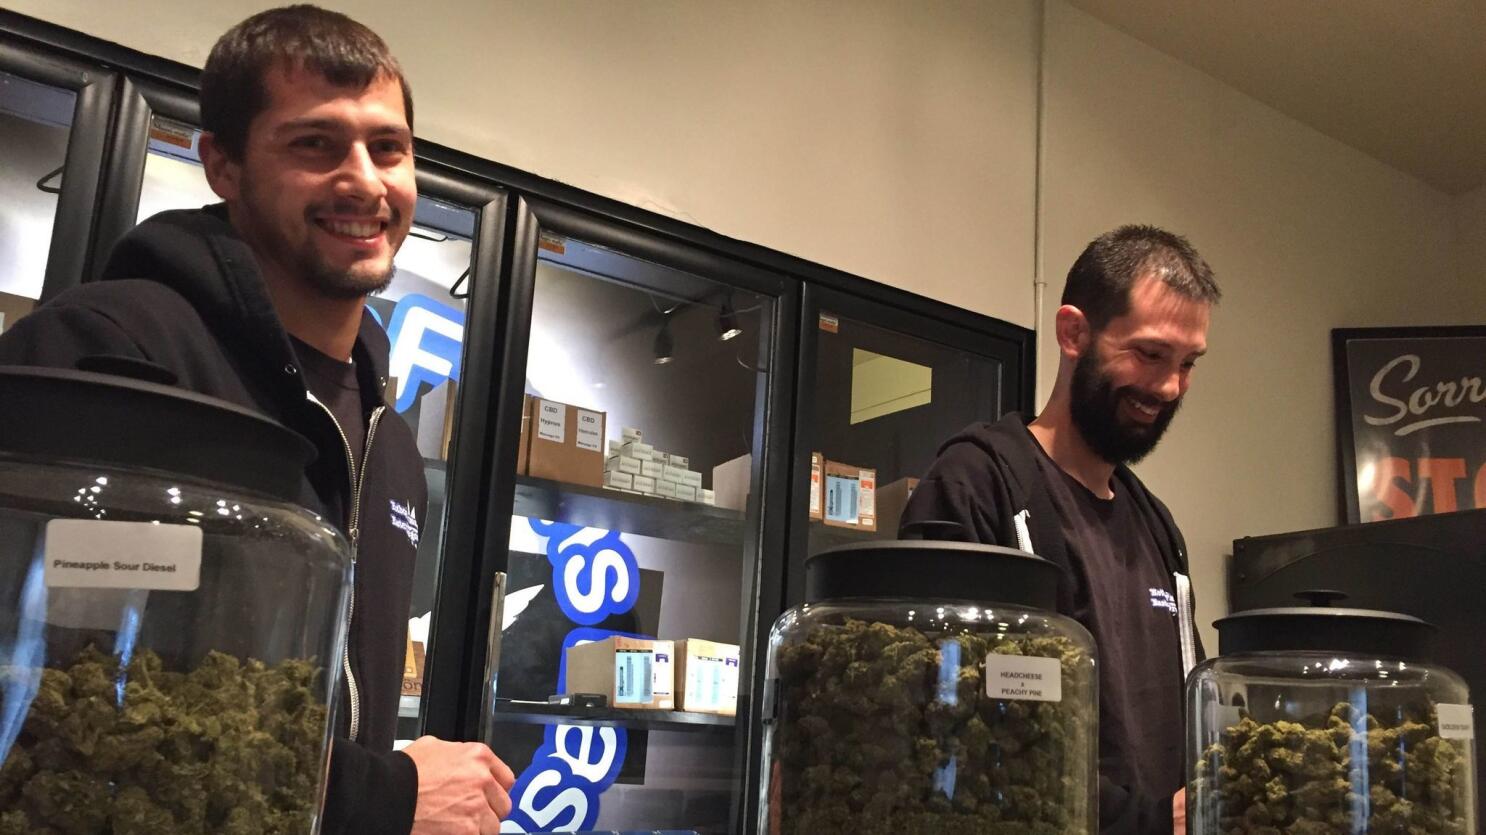 Marijuana Dispensary Legal Weed Serving Tray by Guy Blank